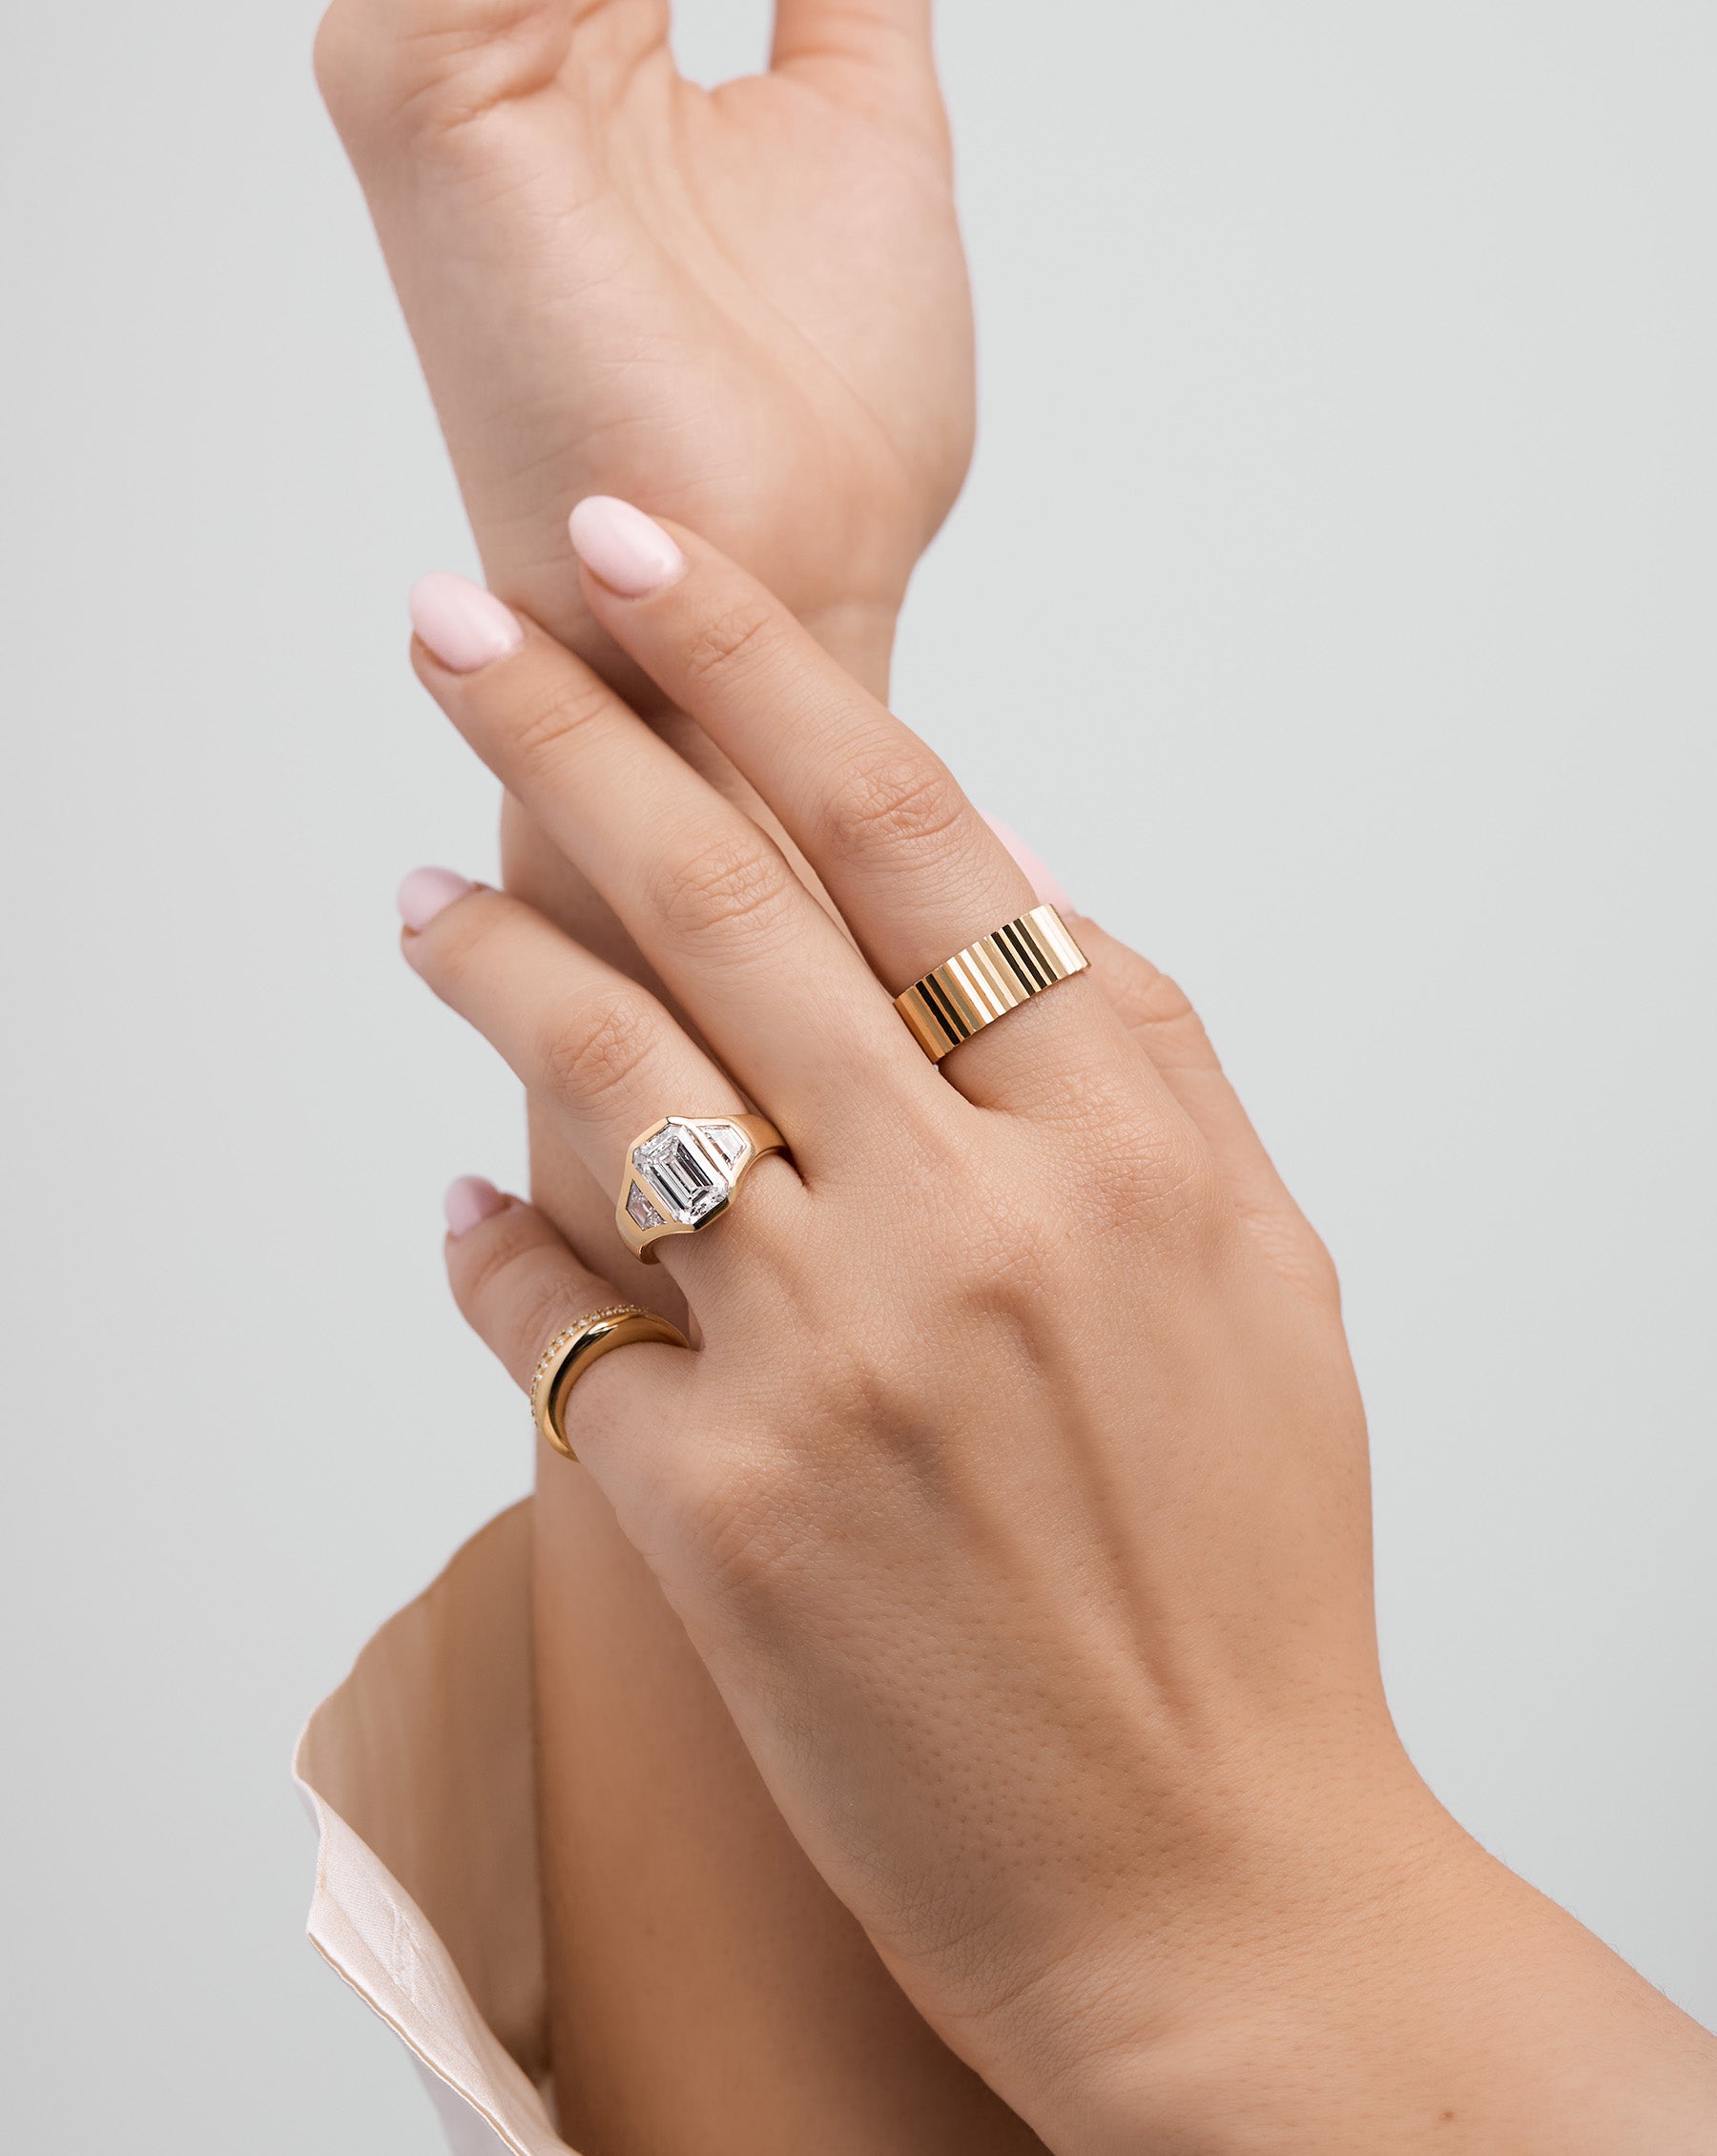 Buy Best Friend Rings 2 Rings / Hand Stamped Metal Ring / Secret Message  Online in India - Etsy